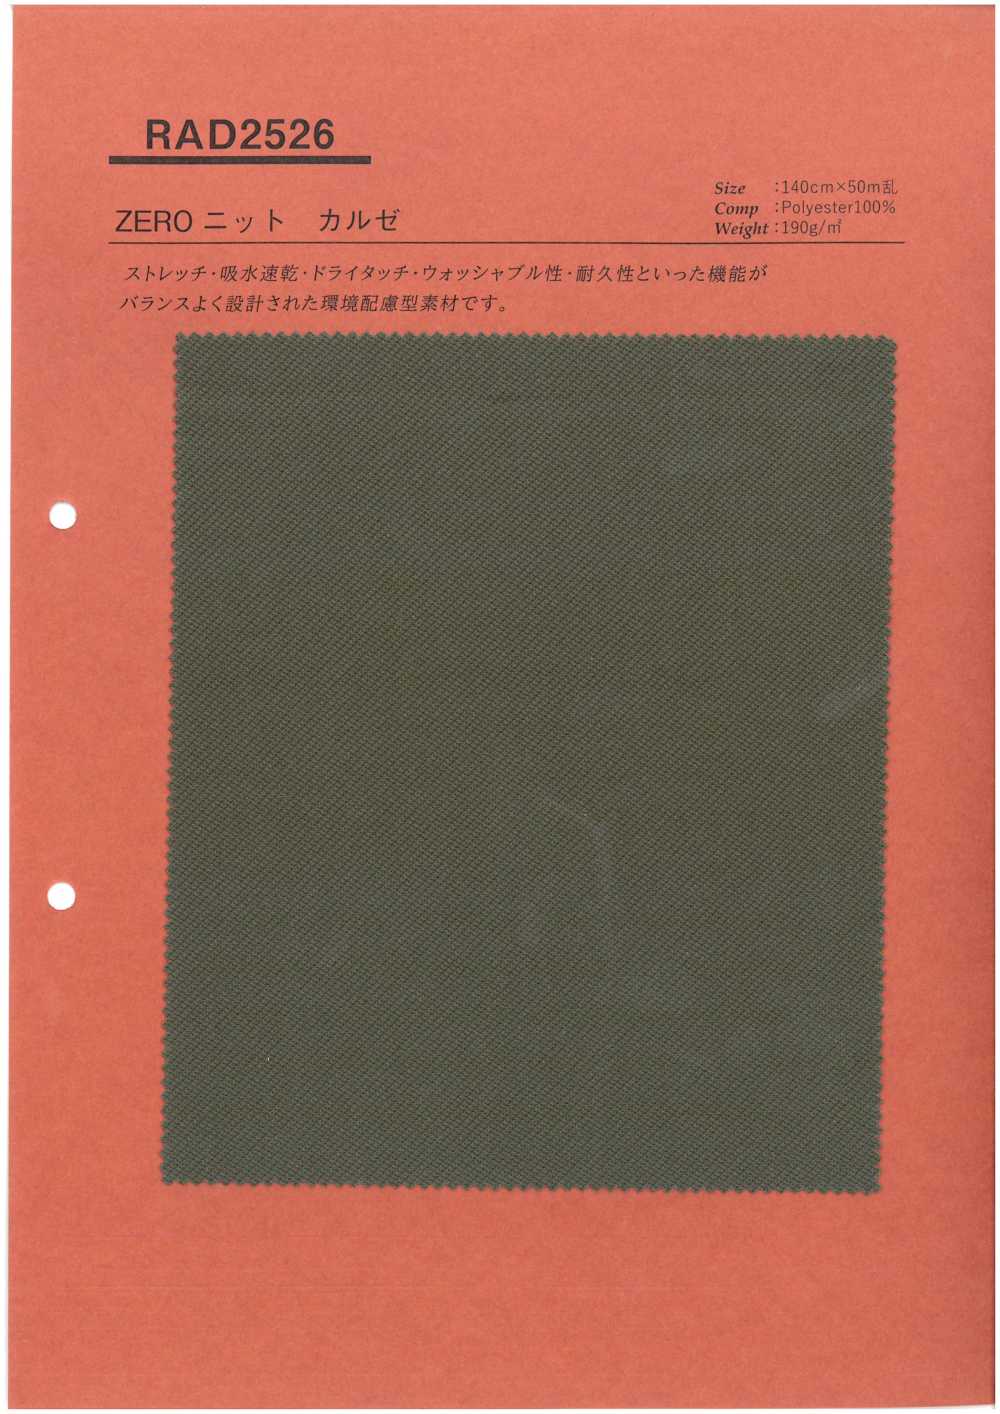 RAD2526 Sustenza® ZERO Kersey[Textilgewebe] Takato